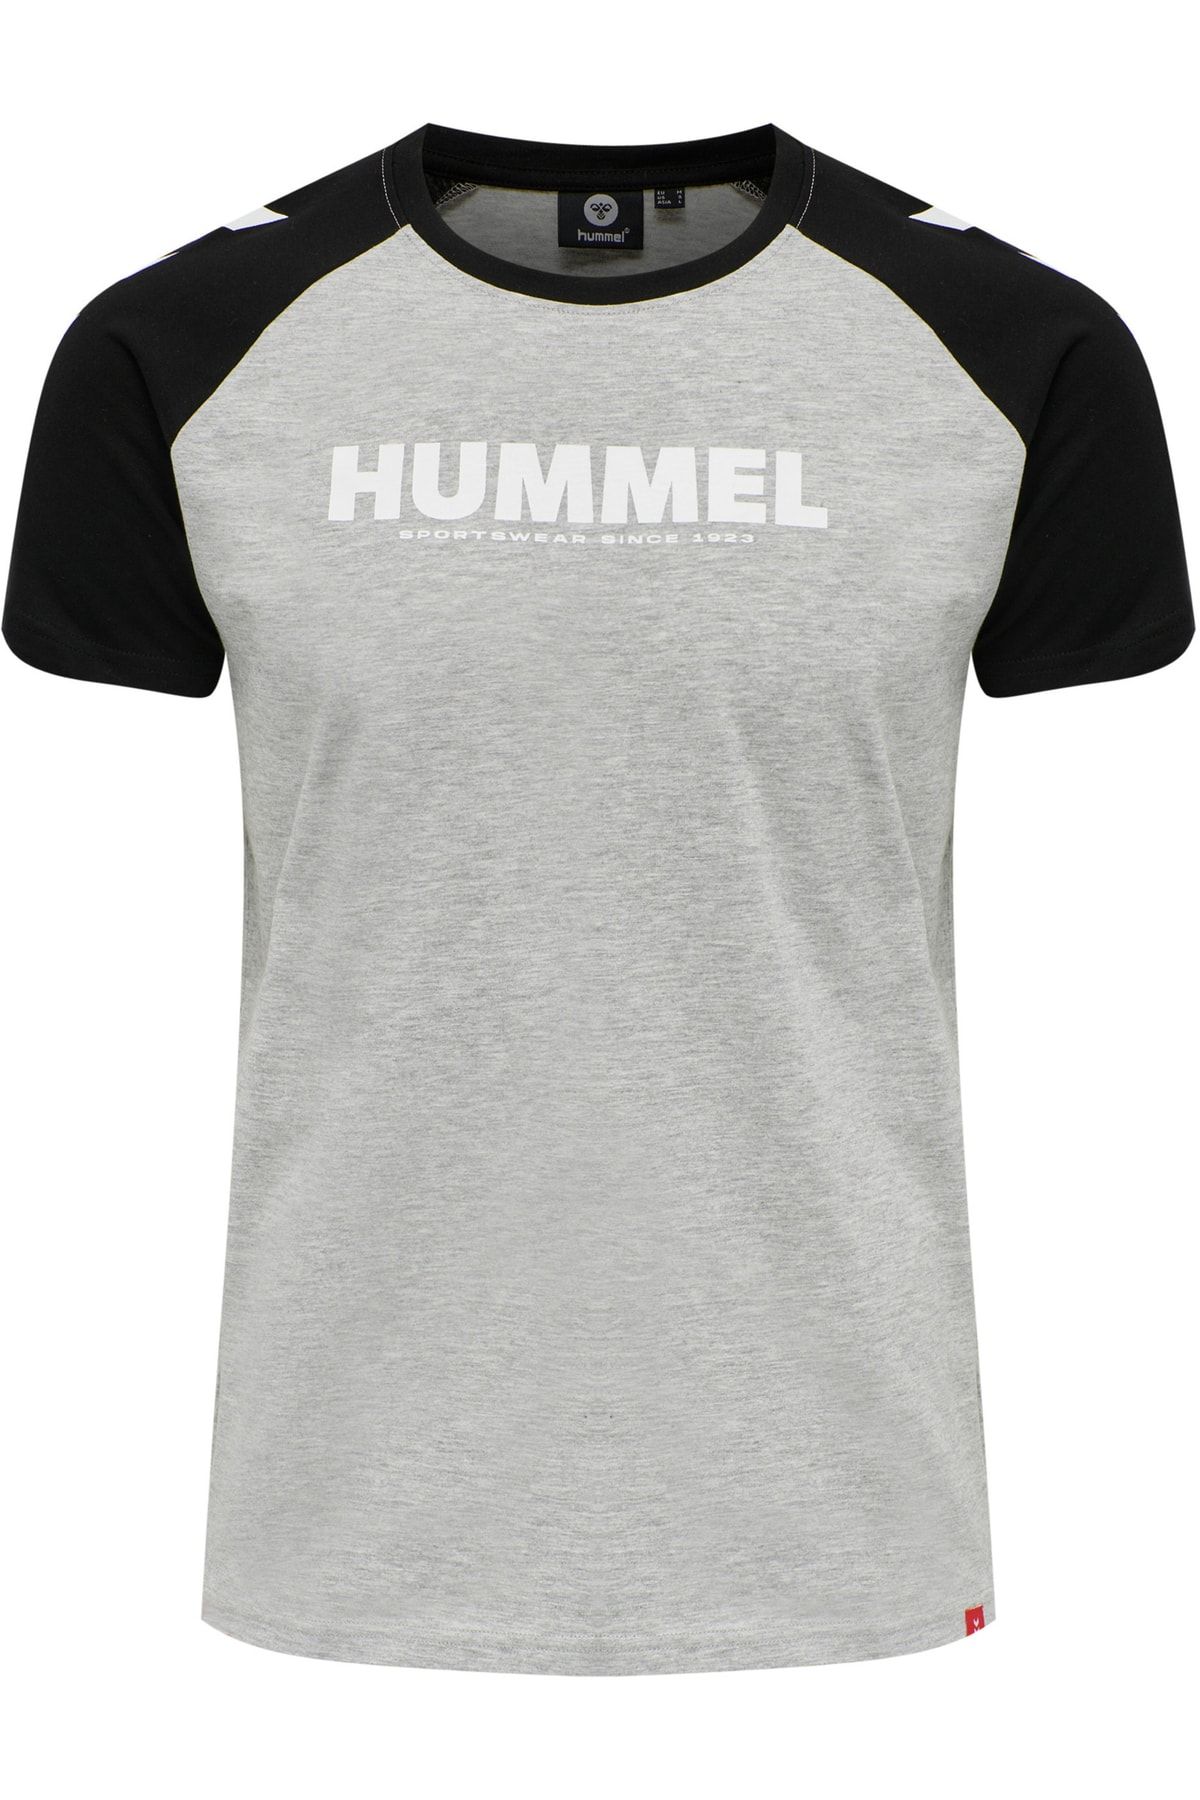 HUMMEL hmlLEGACY Trendyol - BLOCKED T-SHIRT